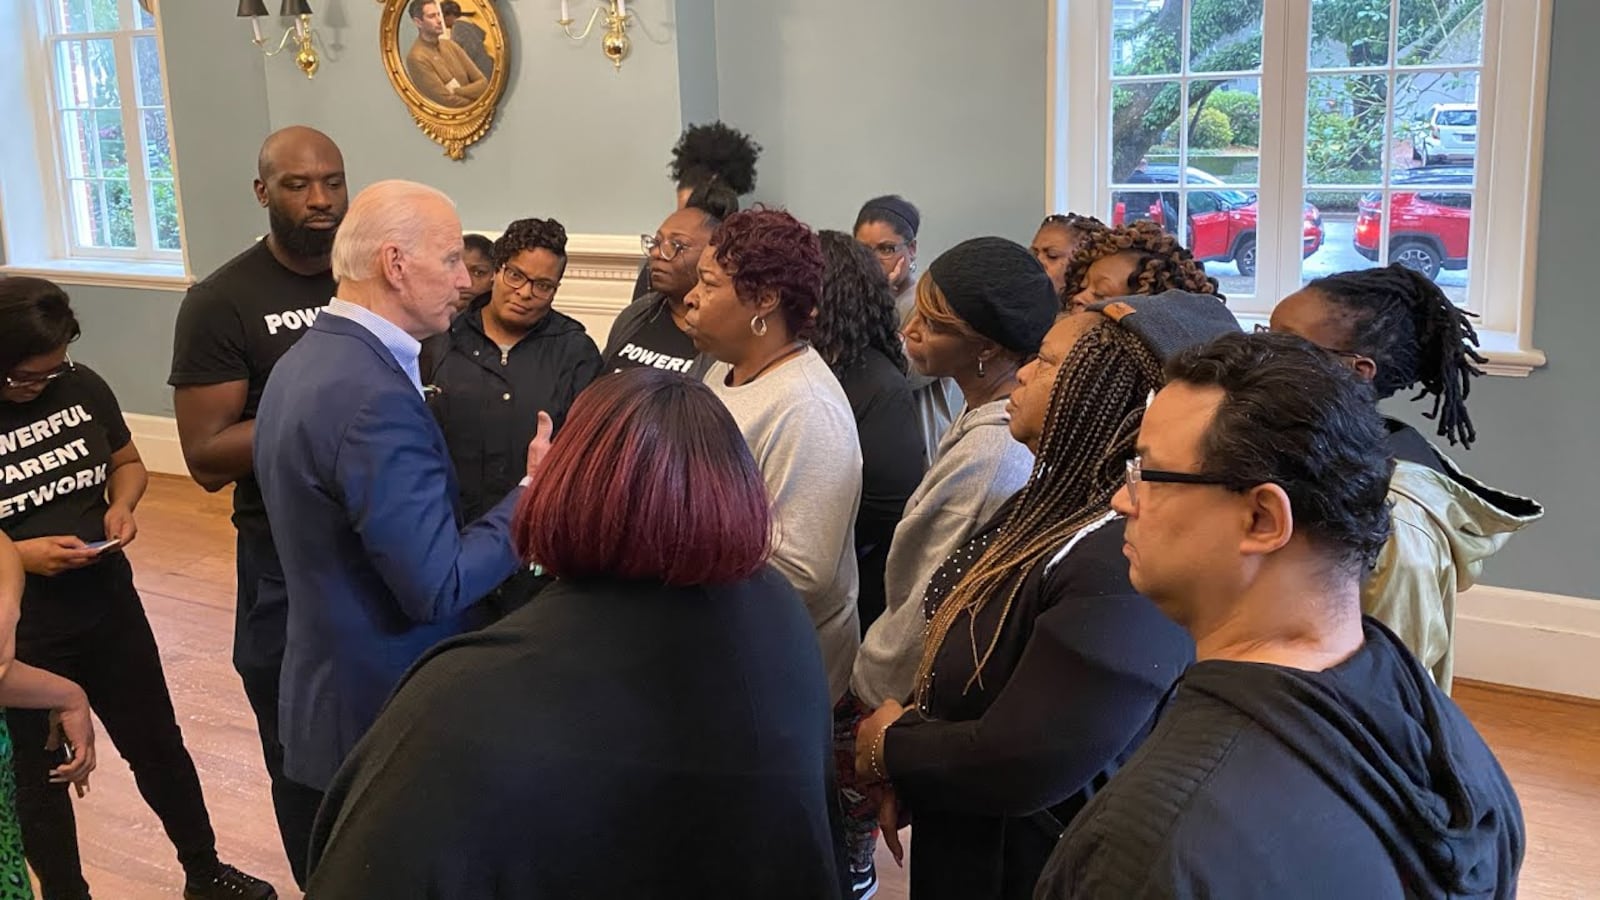 Former Vice President Joe Biden meets with the Powerful Parent Network, including Sarah Carpenter, center.